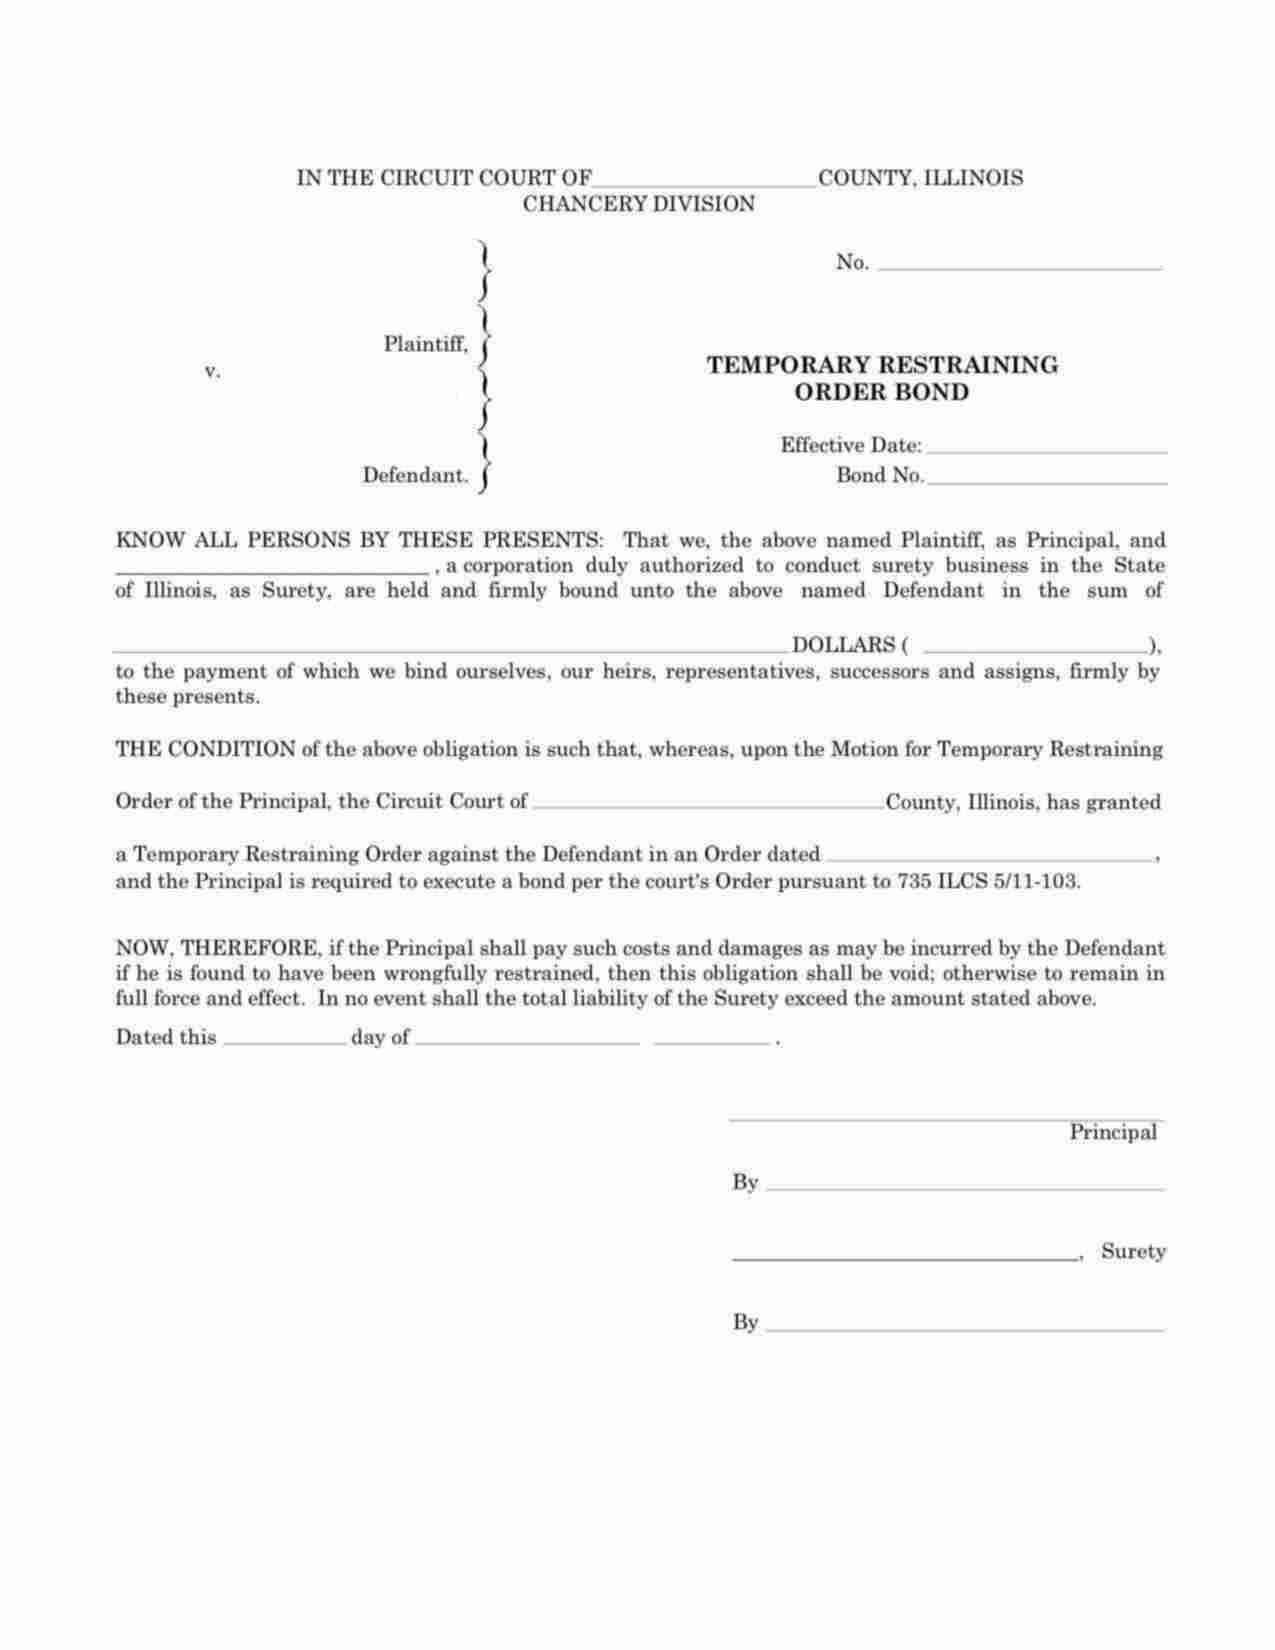 Illinois Temporary Restraining Order Bond Form